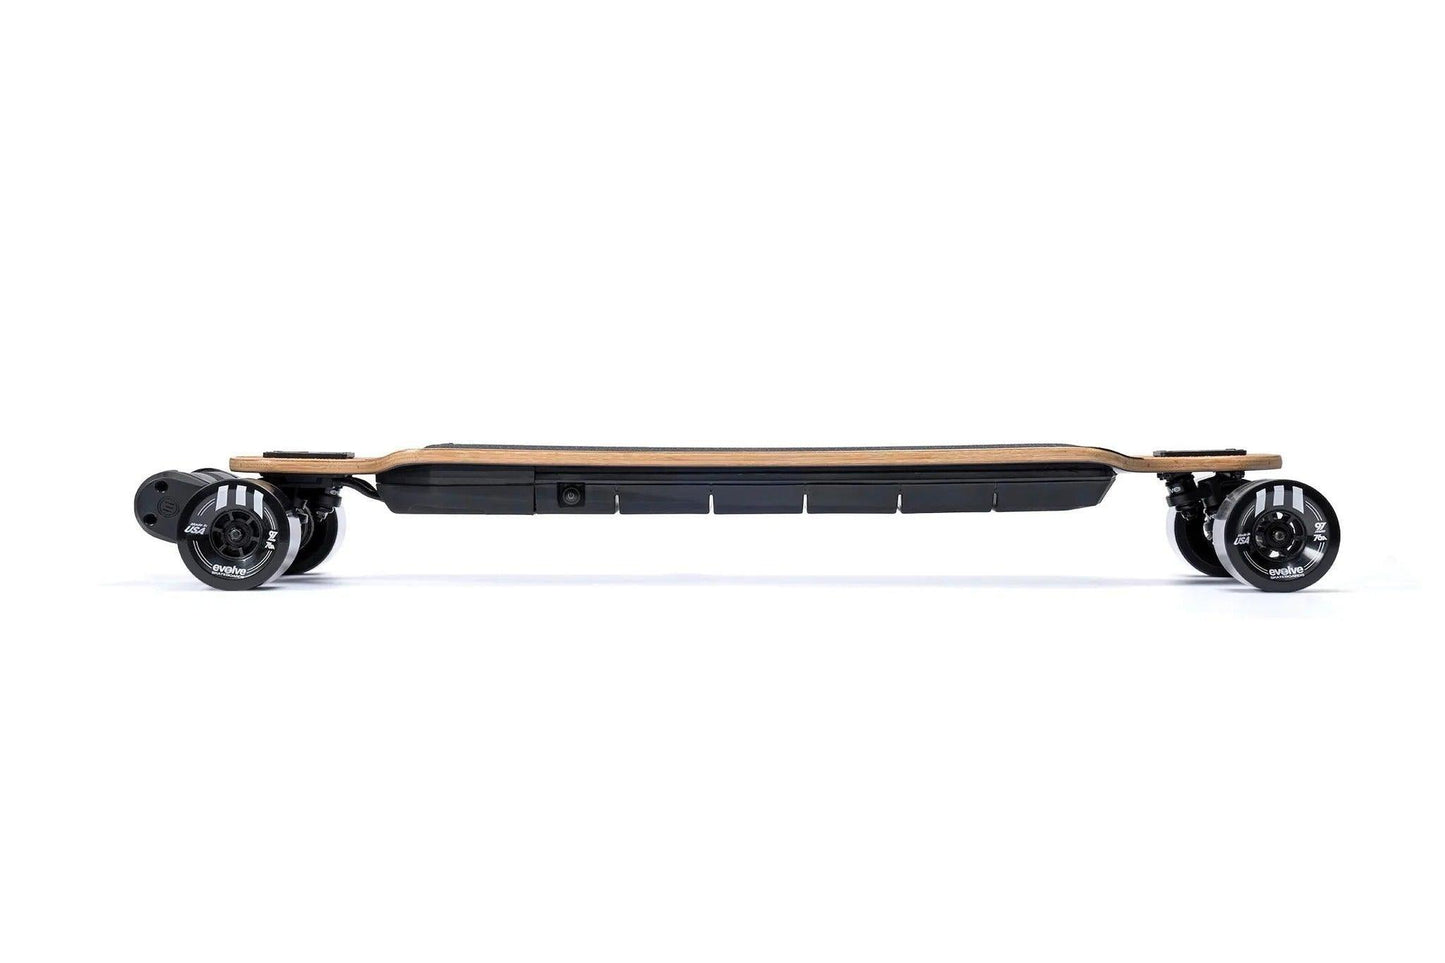 Evolve GTR Bamboo Street Series 2 **On Sale** - skateboards - skateboards - Electric Monkey NZ